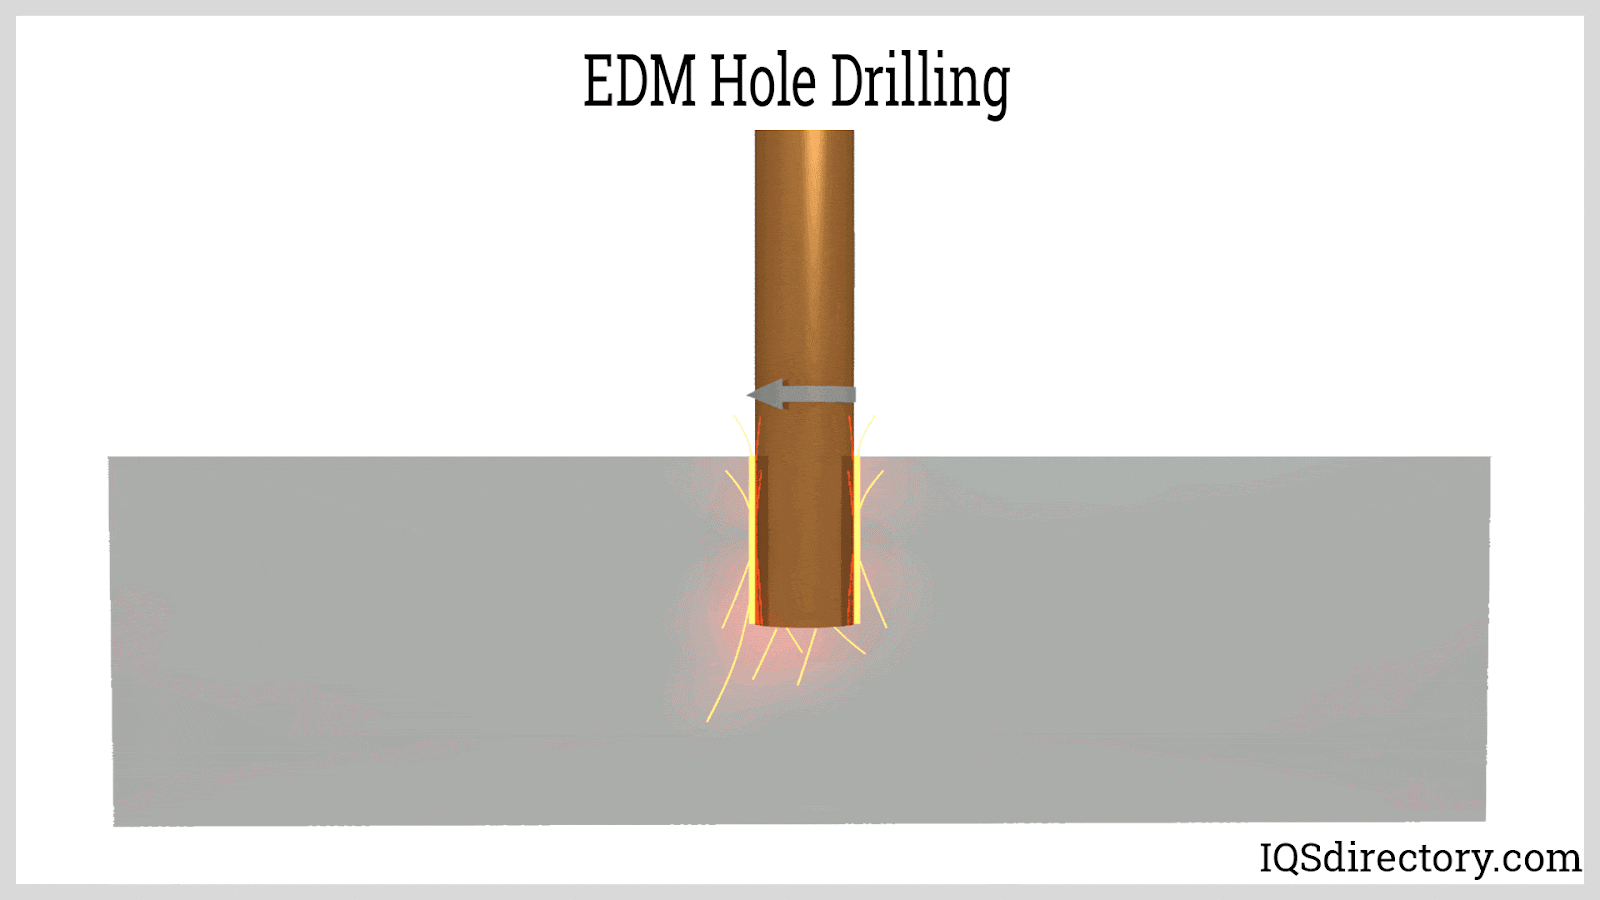 EDM Hole Drilling